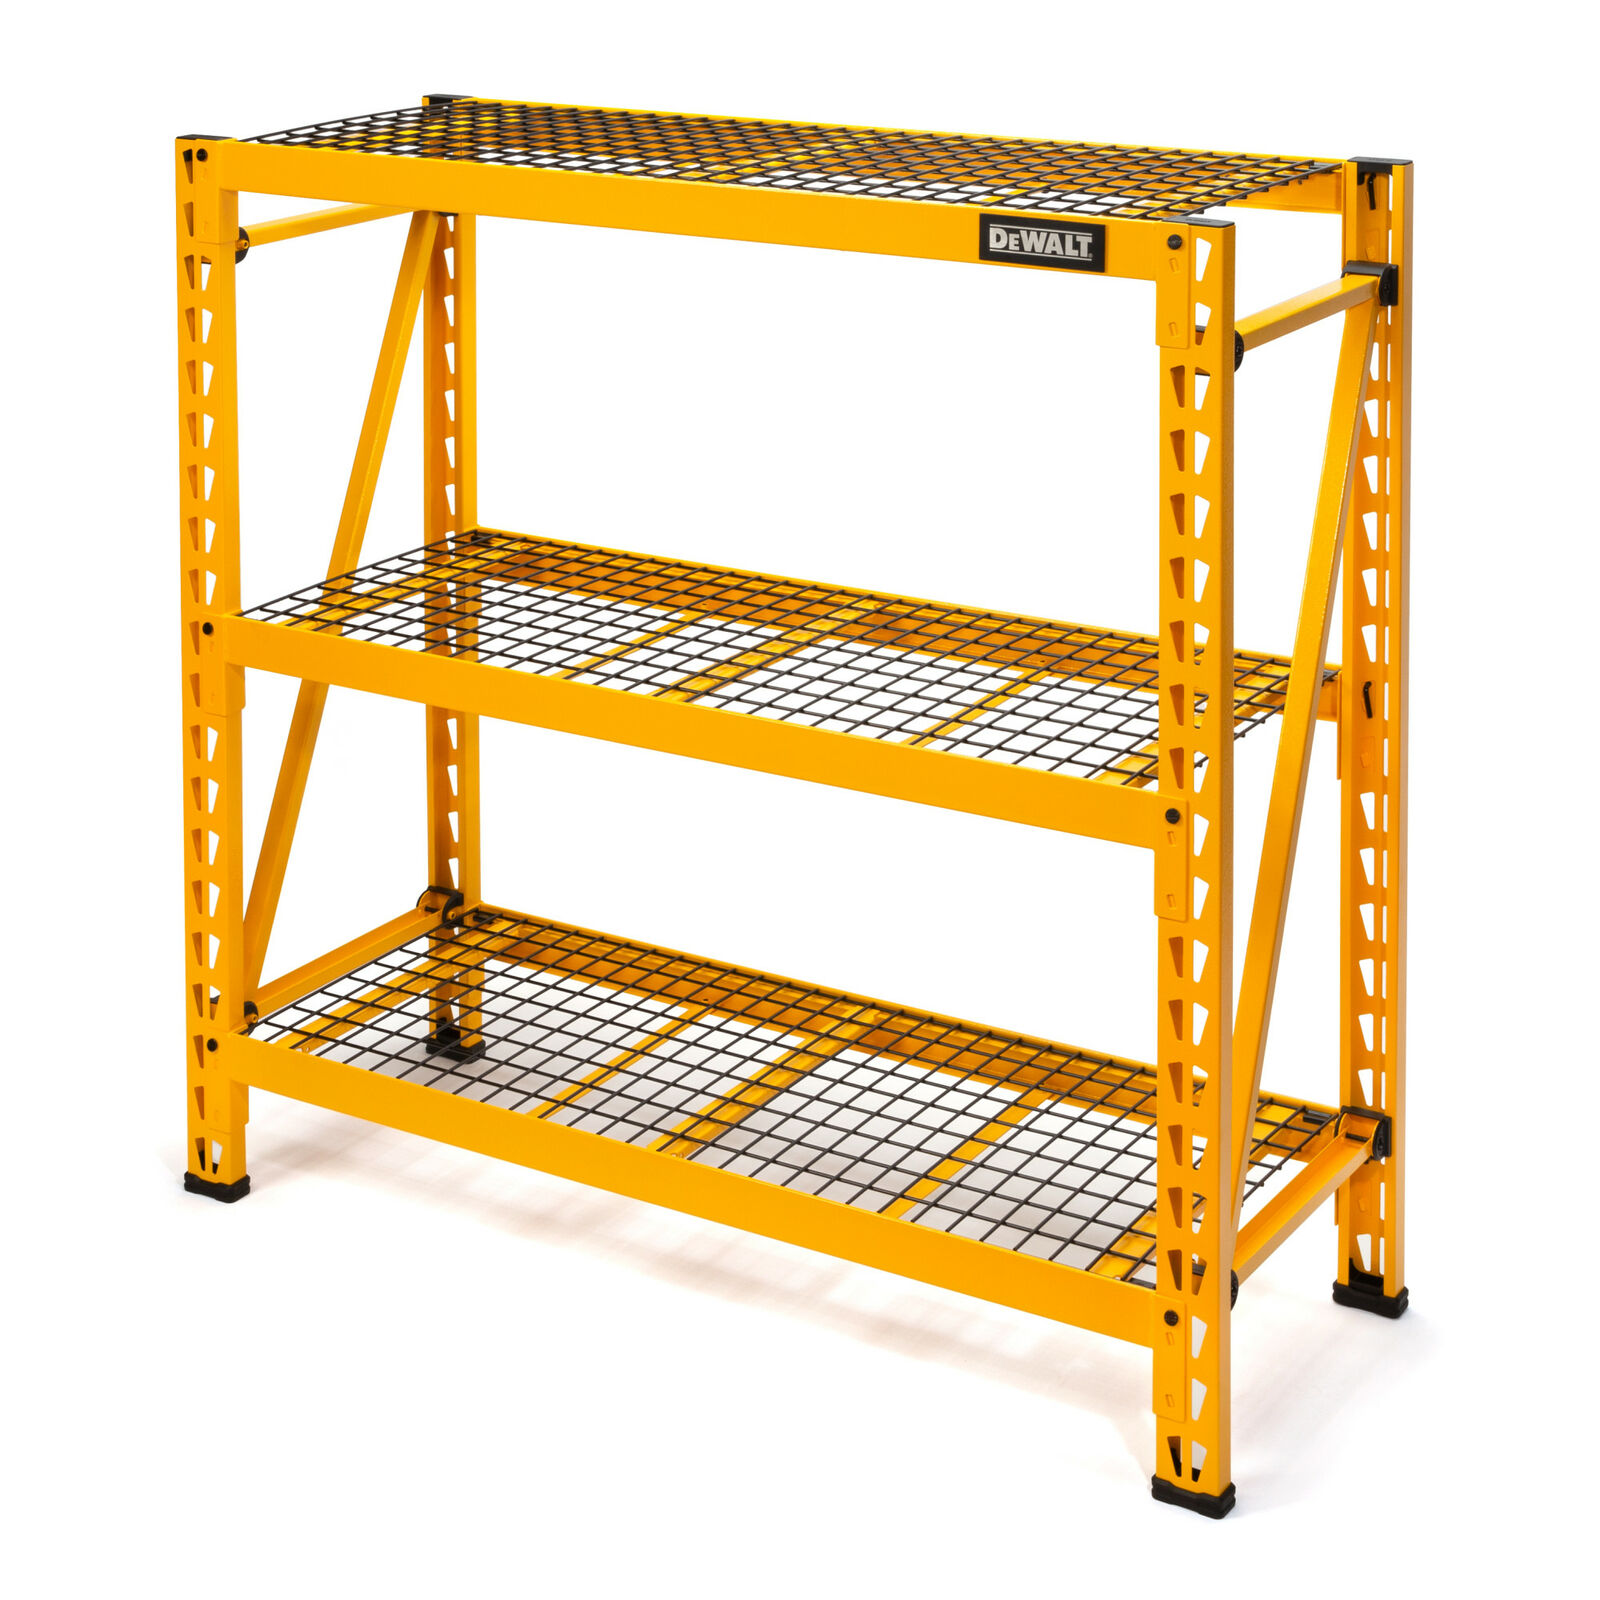 Dewalt  4 ft. Tall 3 Shelf Steel Wire Deck Storage Rack DXST4500-W $158.69